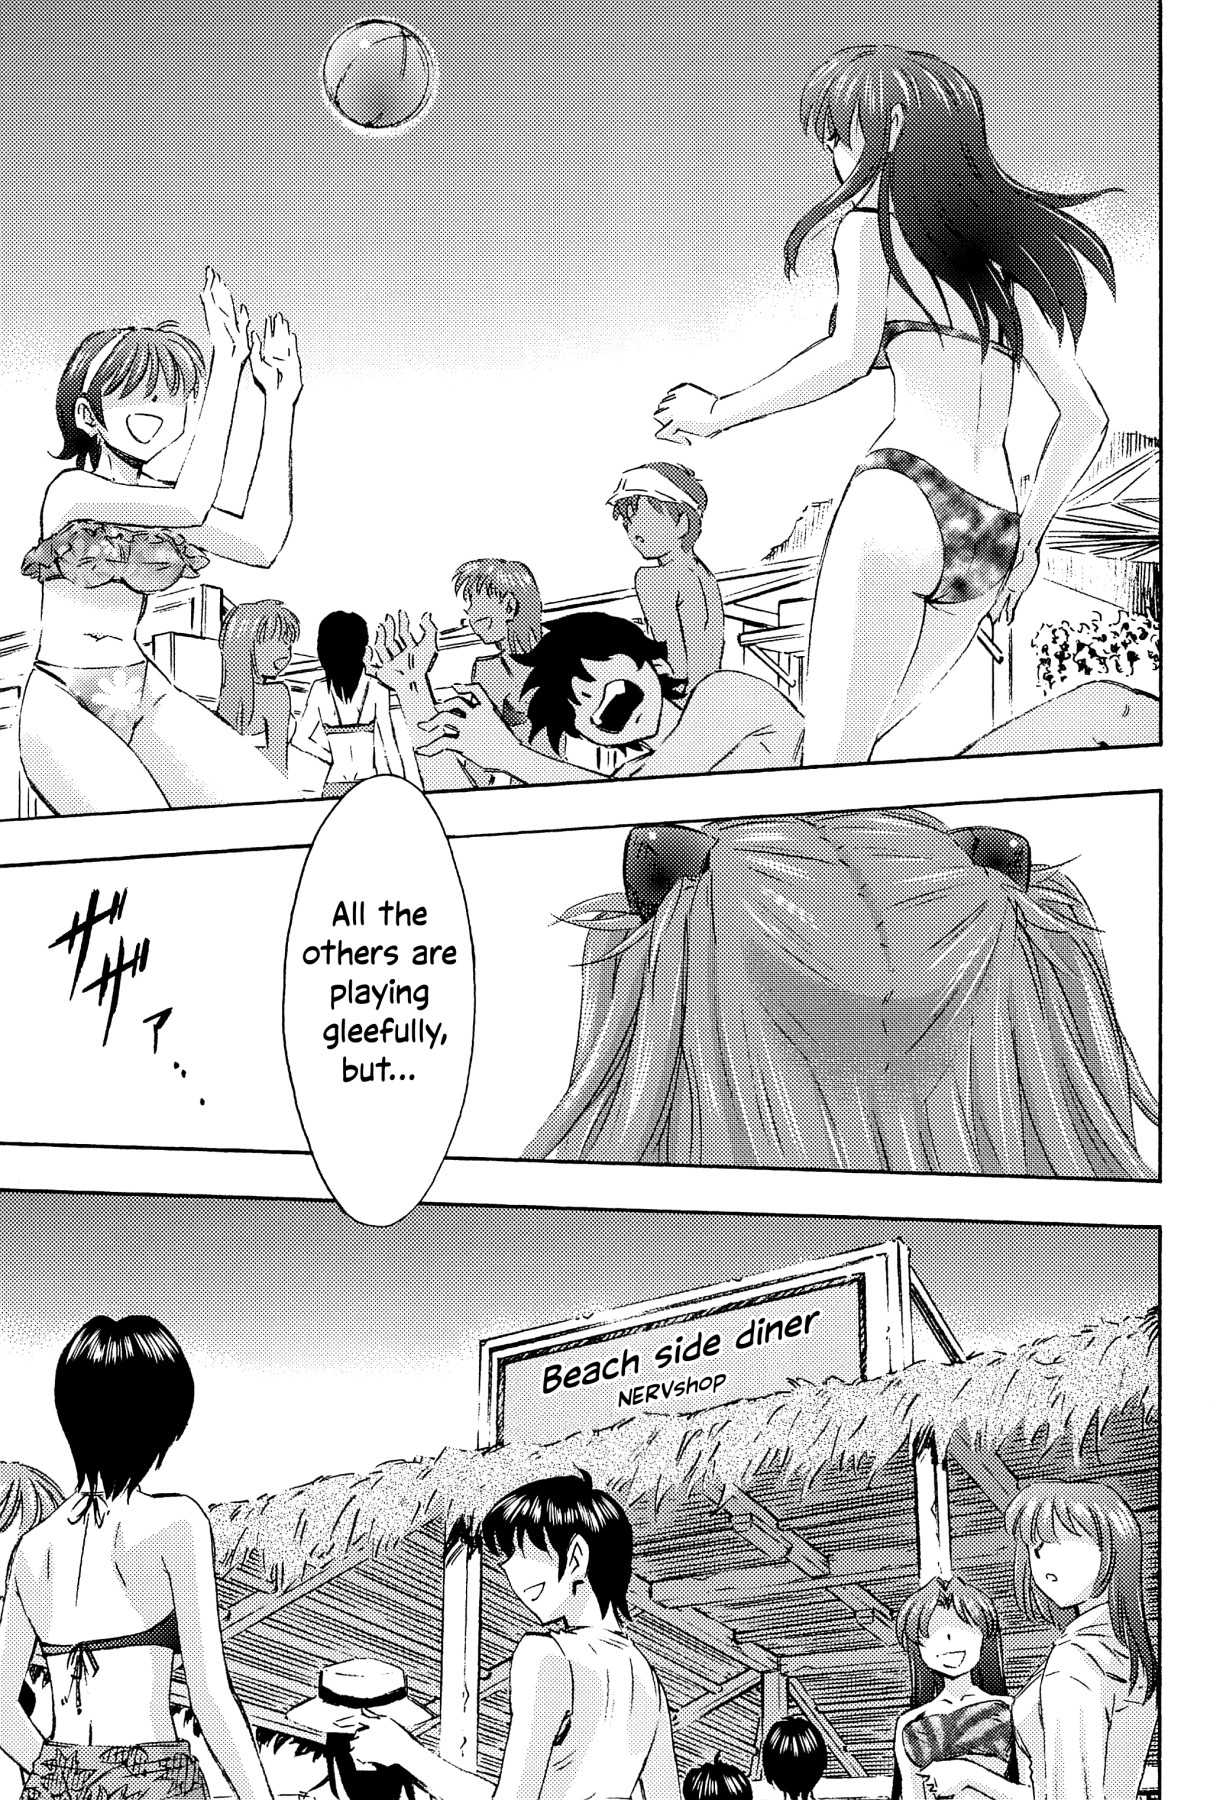 Hentai Manga Comic-v22m-3 Girls And A Beach Hut-Read-2